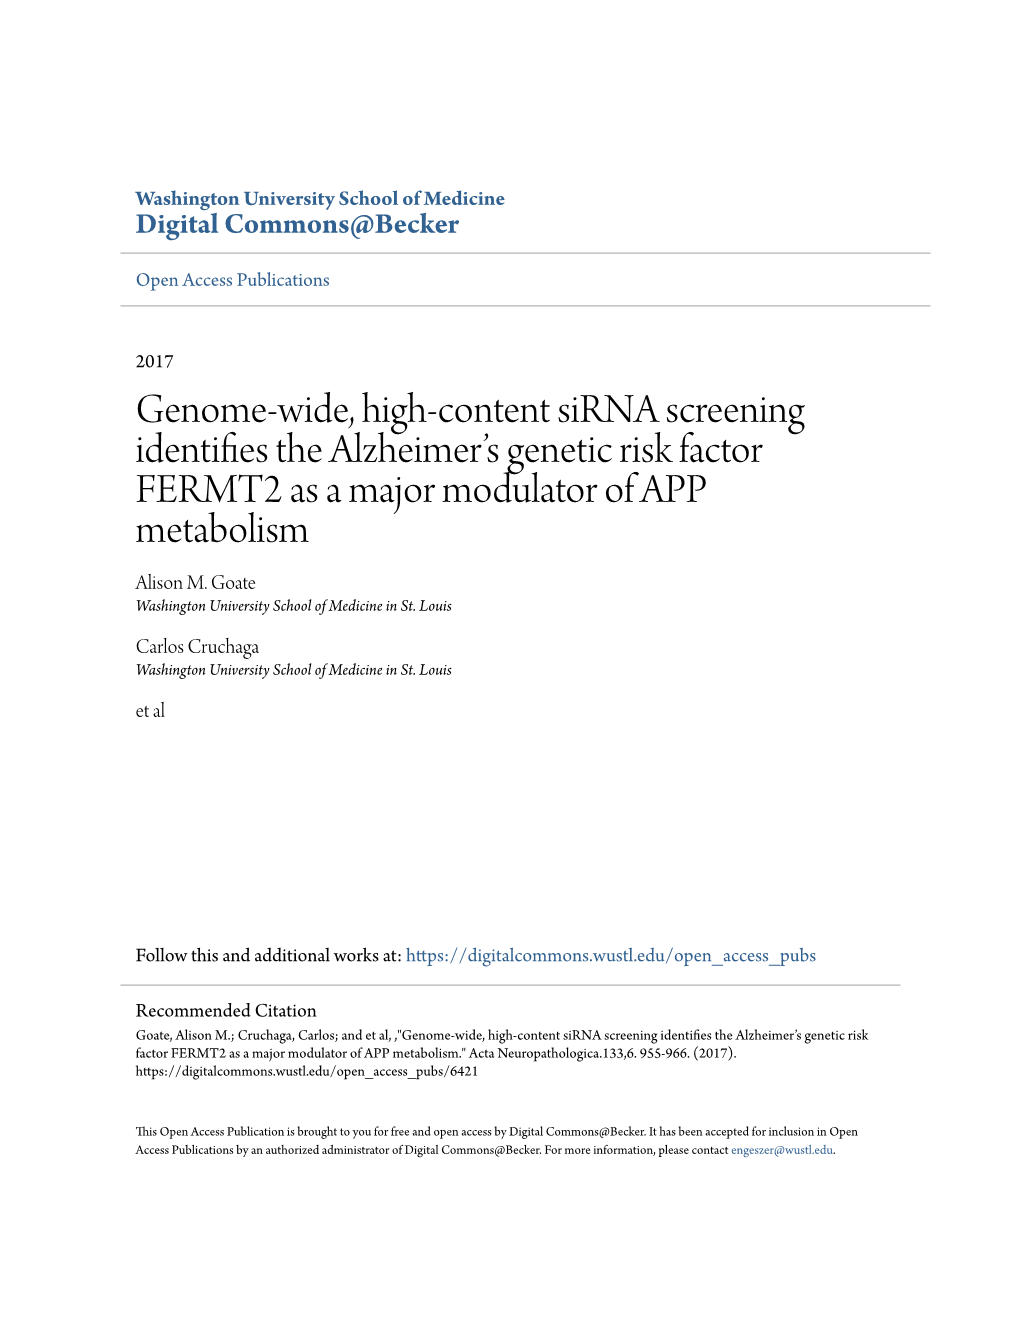 Genome-Wide, High-Content Sirna Screening Identifies the Alzheimerâ